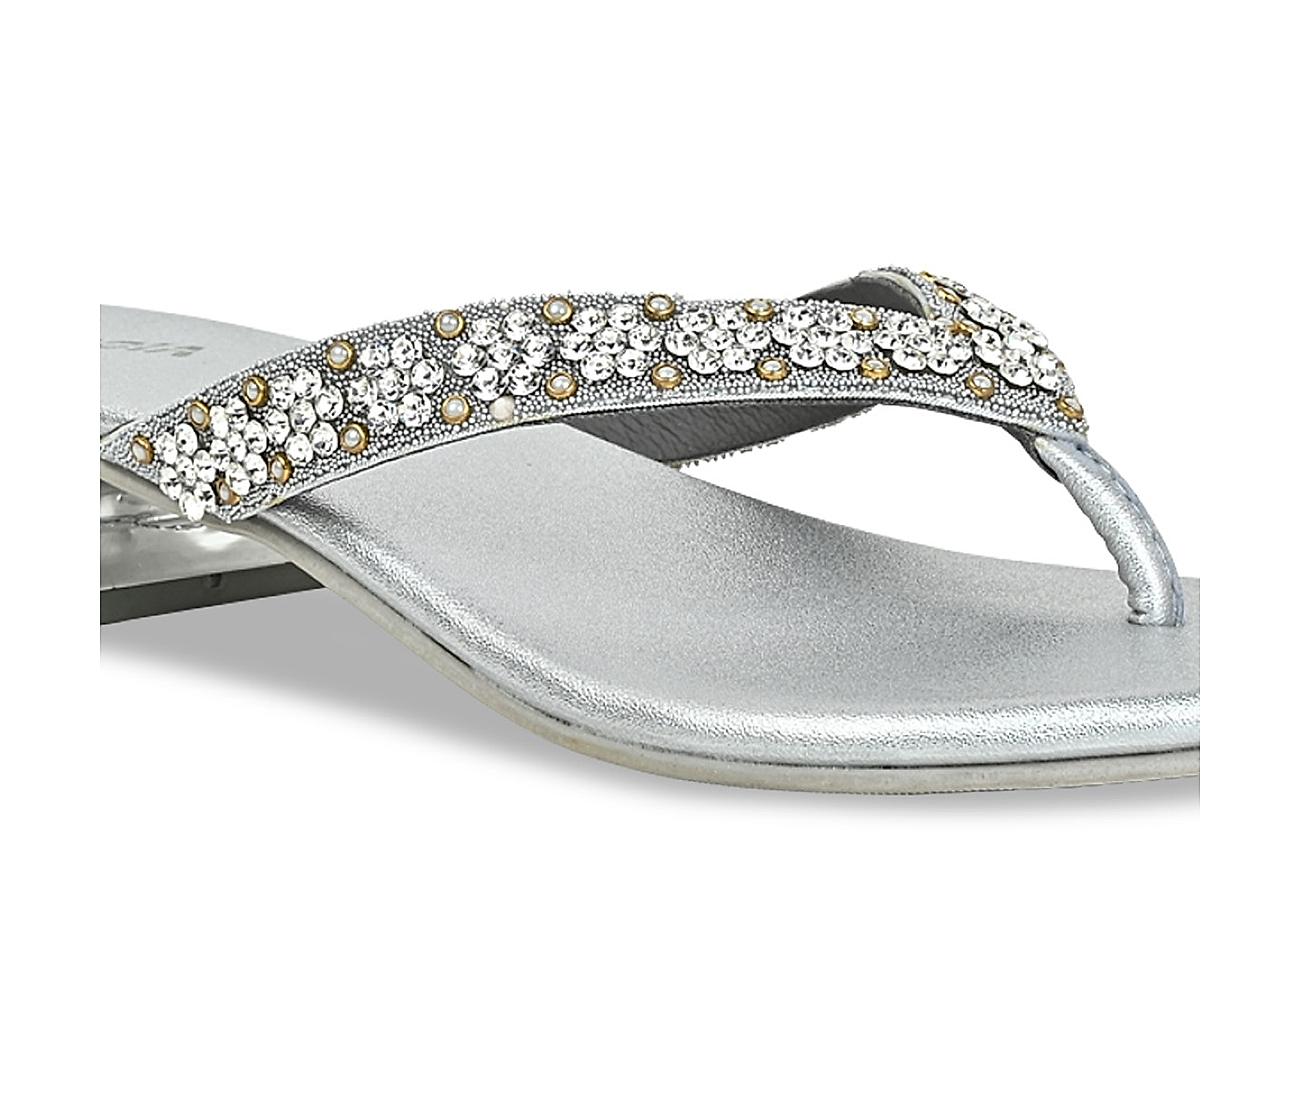 Sandals Flats Flat Heel Silver With Rhinestone Wedding Shoes